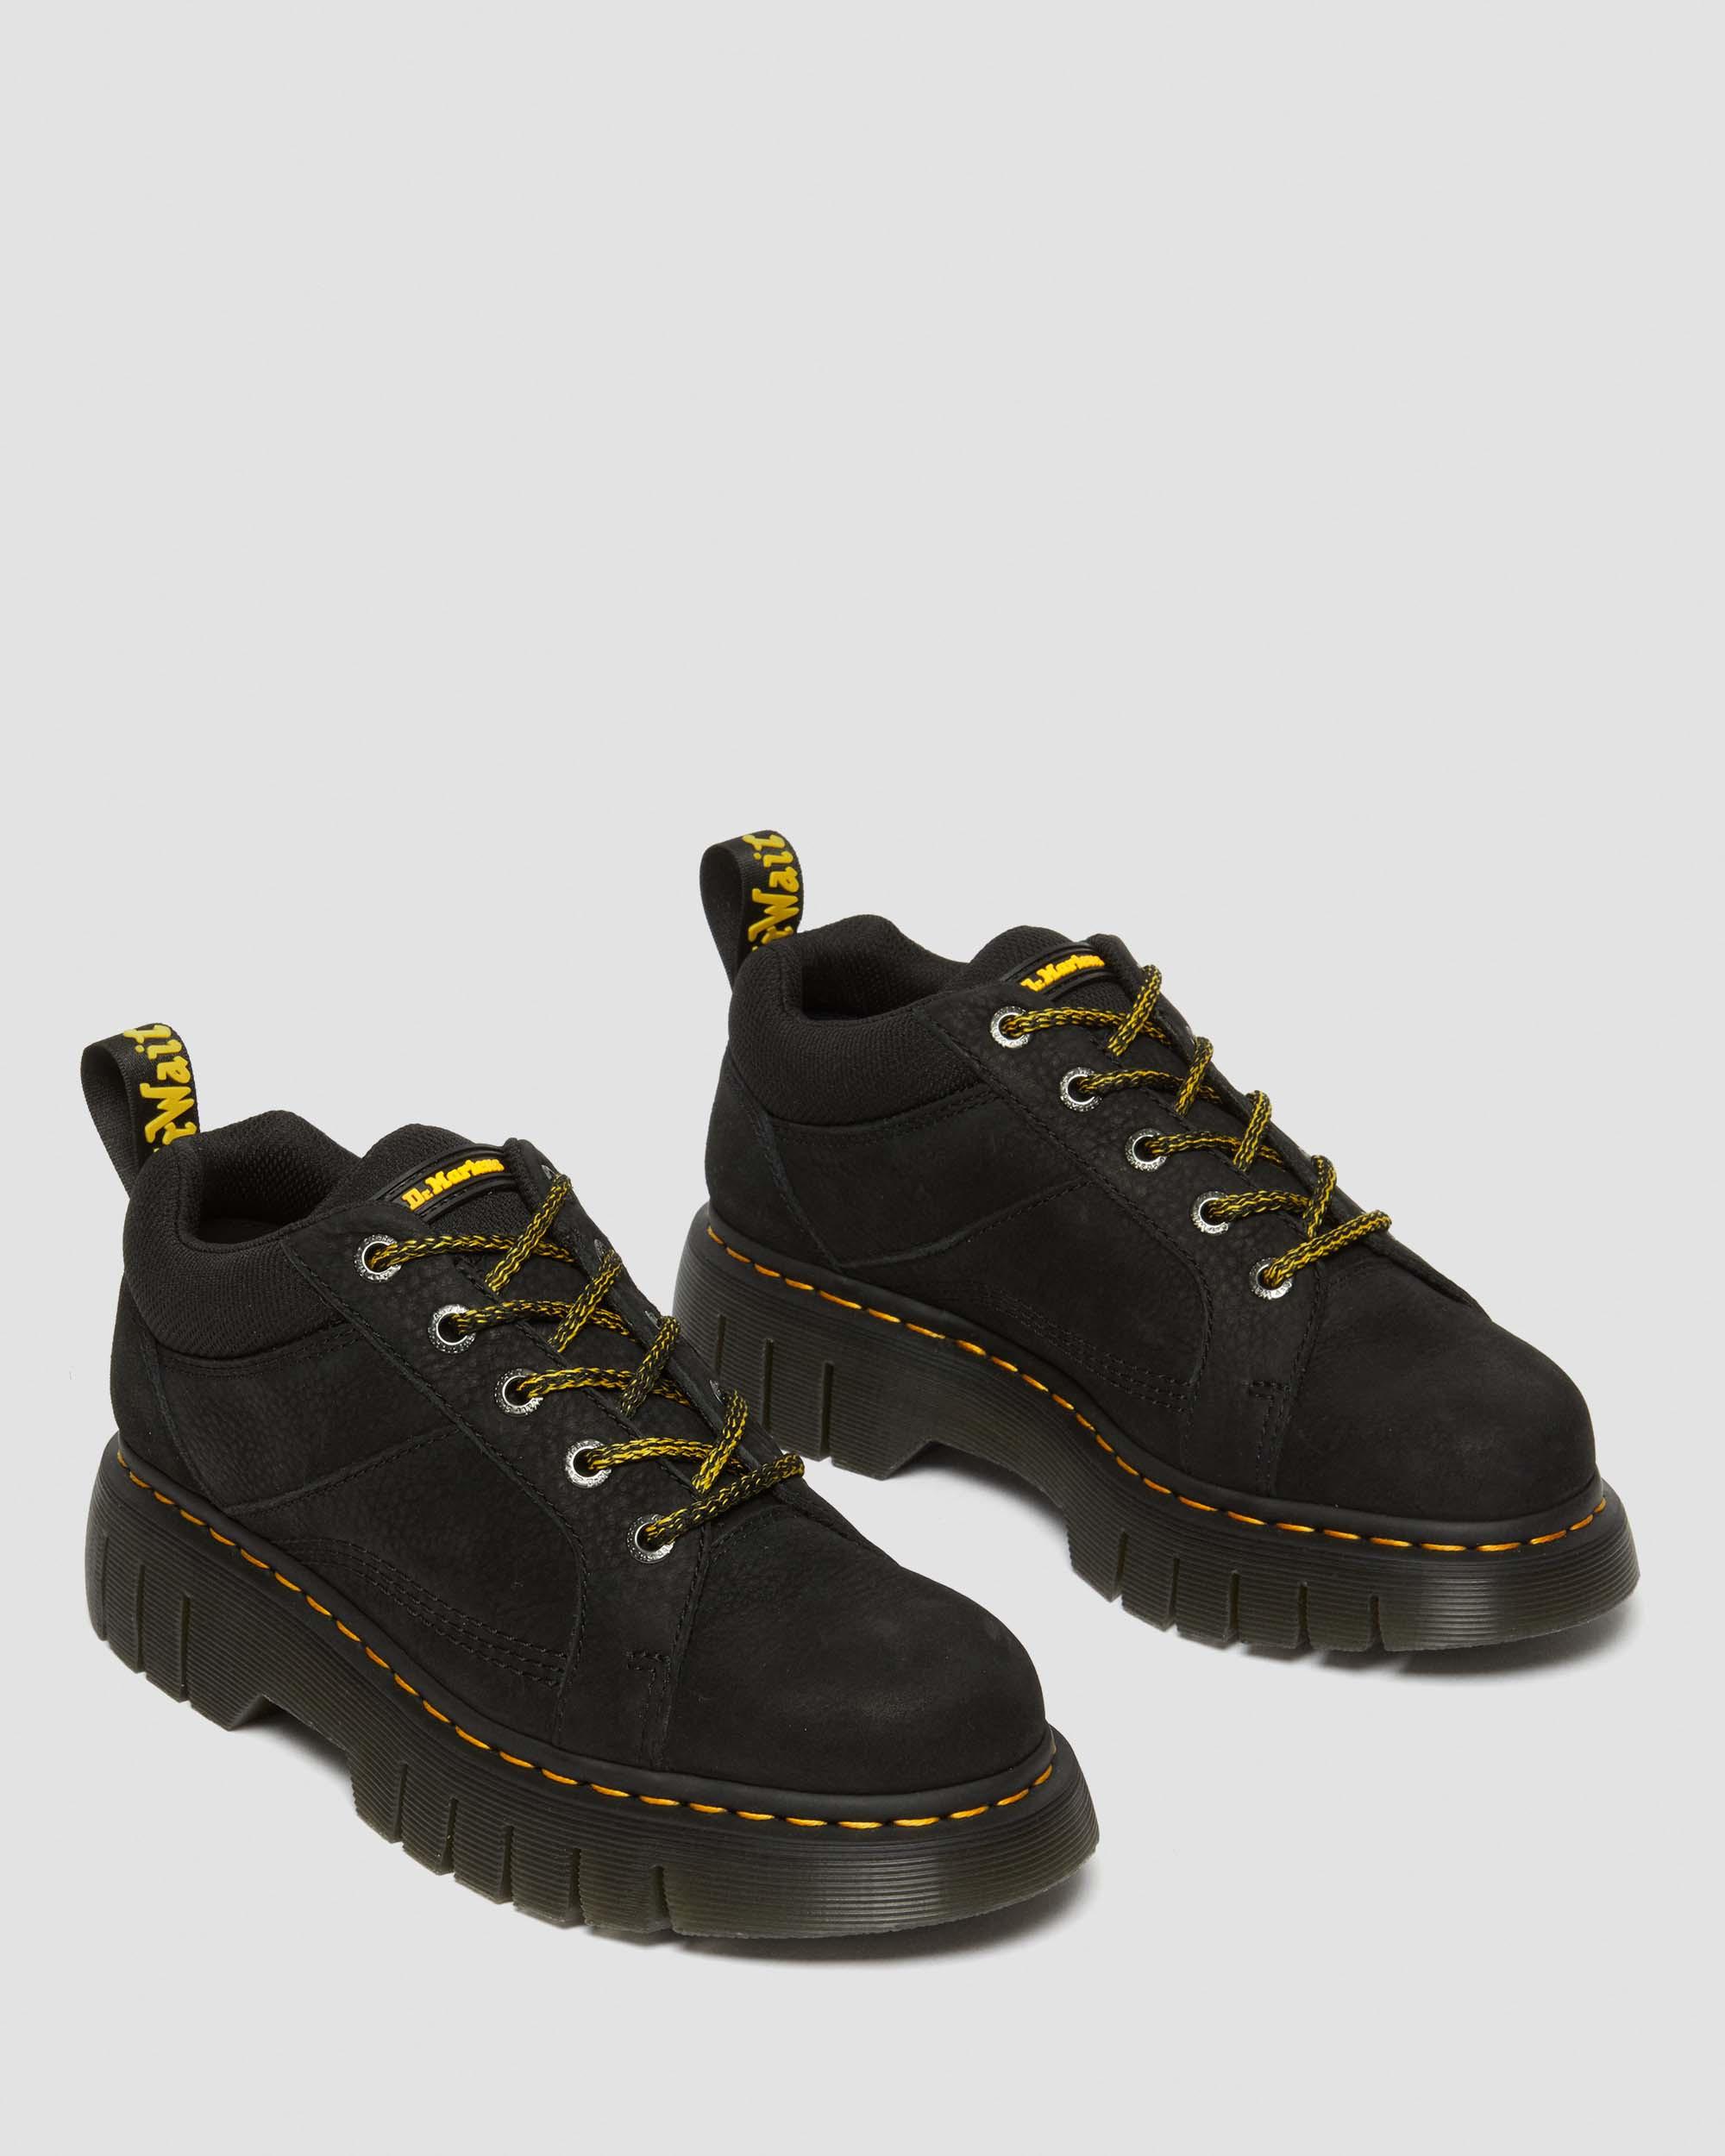 Woodard Tumbled Nubuck Leather Zip Shoes in Black